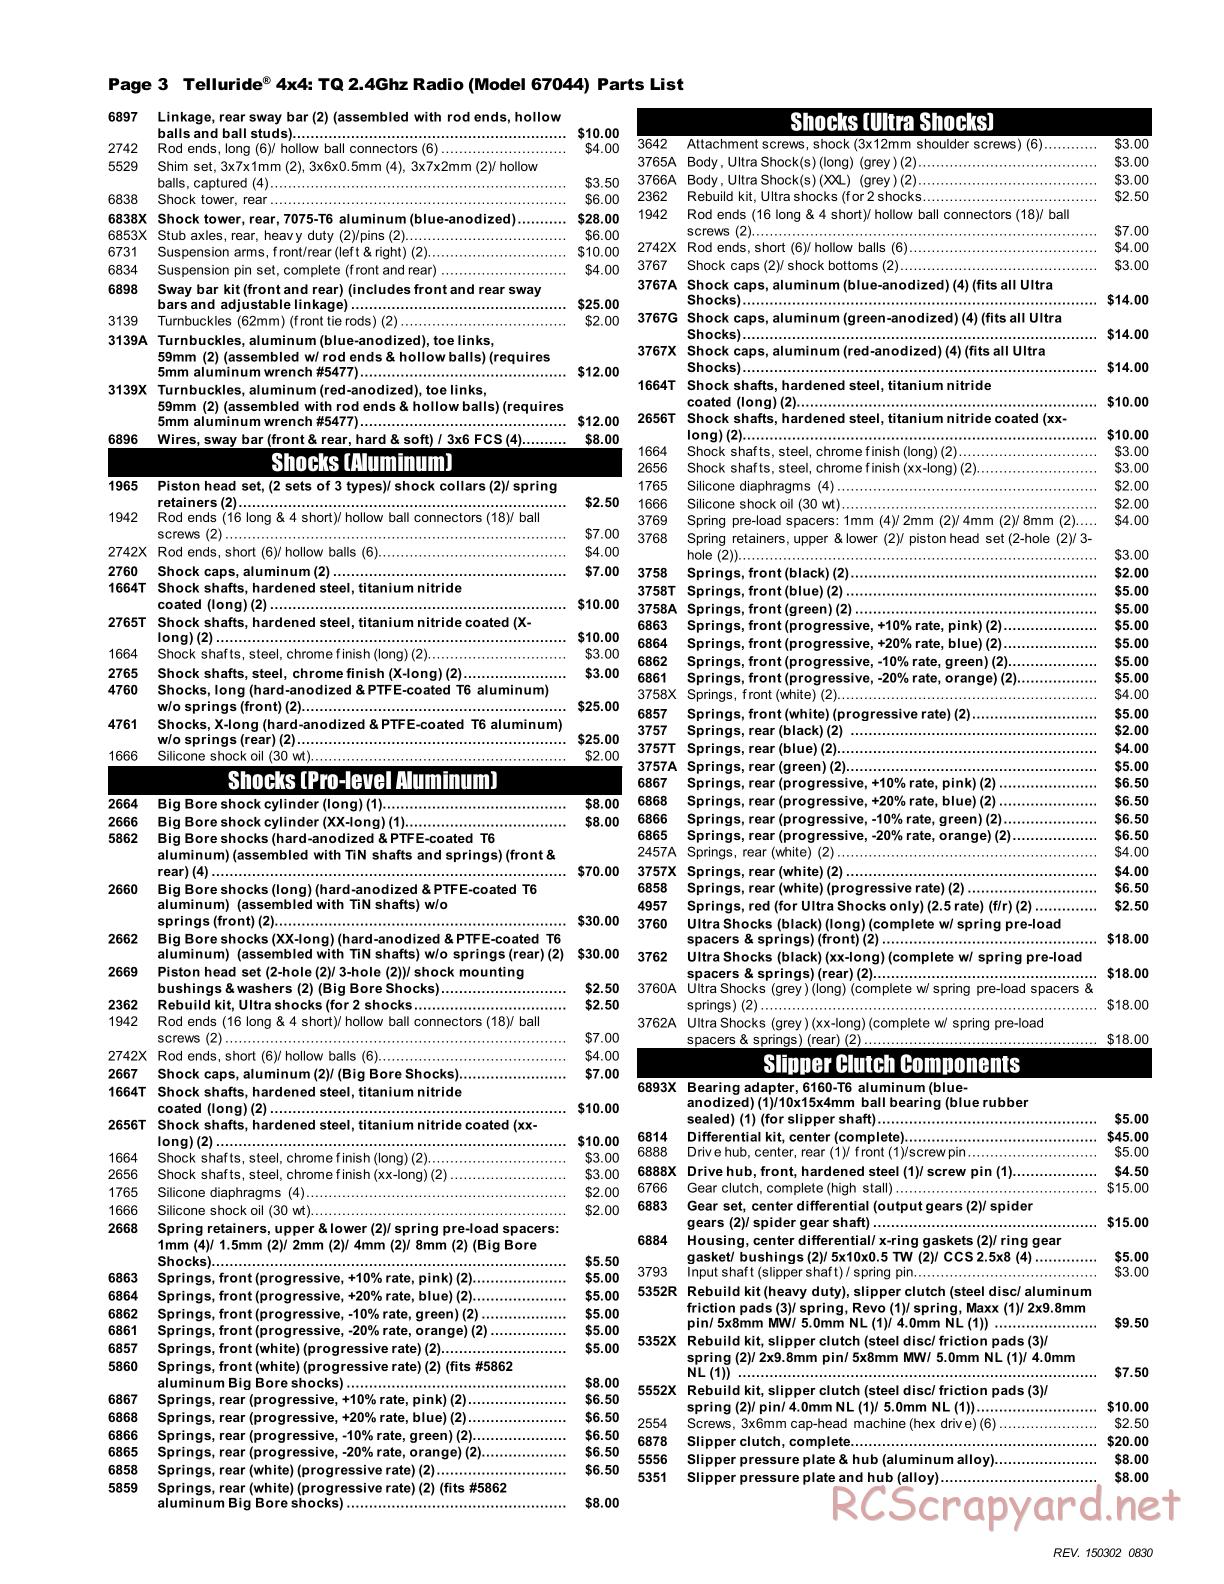 Traxxas - Telluride 4x4 (2013) - Parts List - Page 3